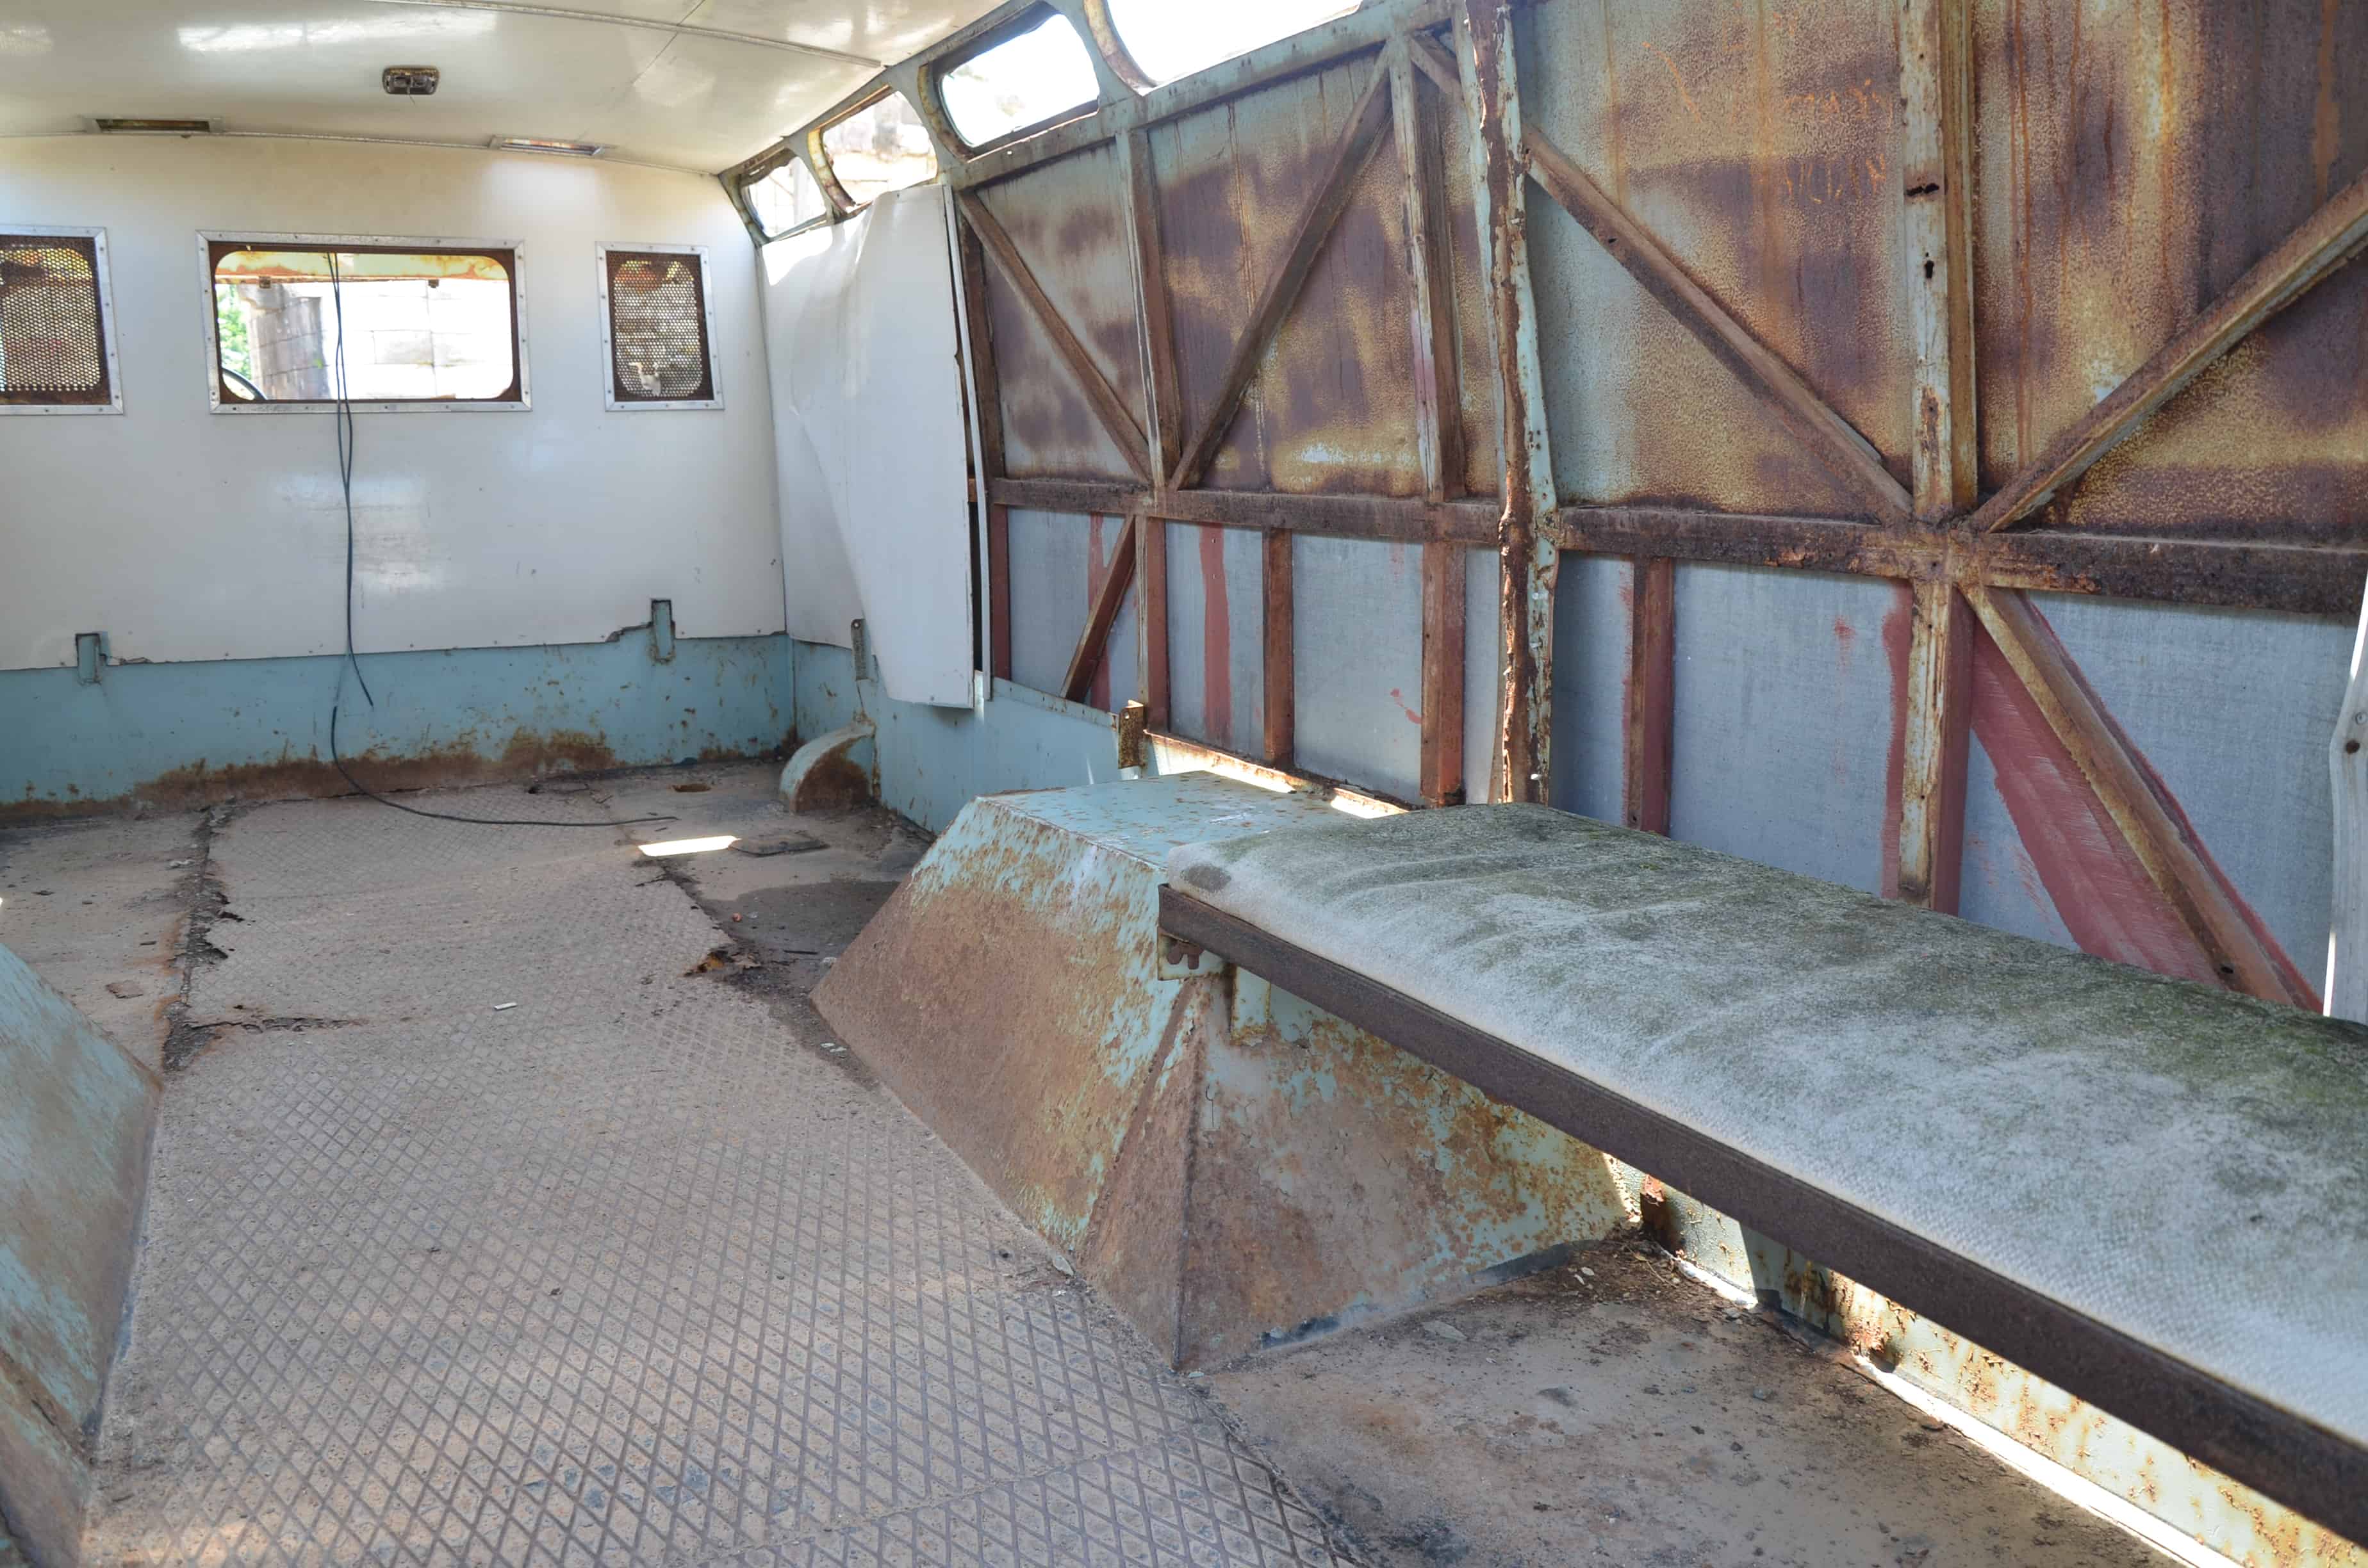 Prison bus at Sinop Cezaevi in Sinop, Turkey